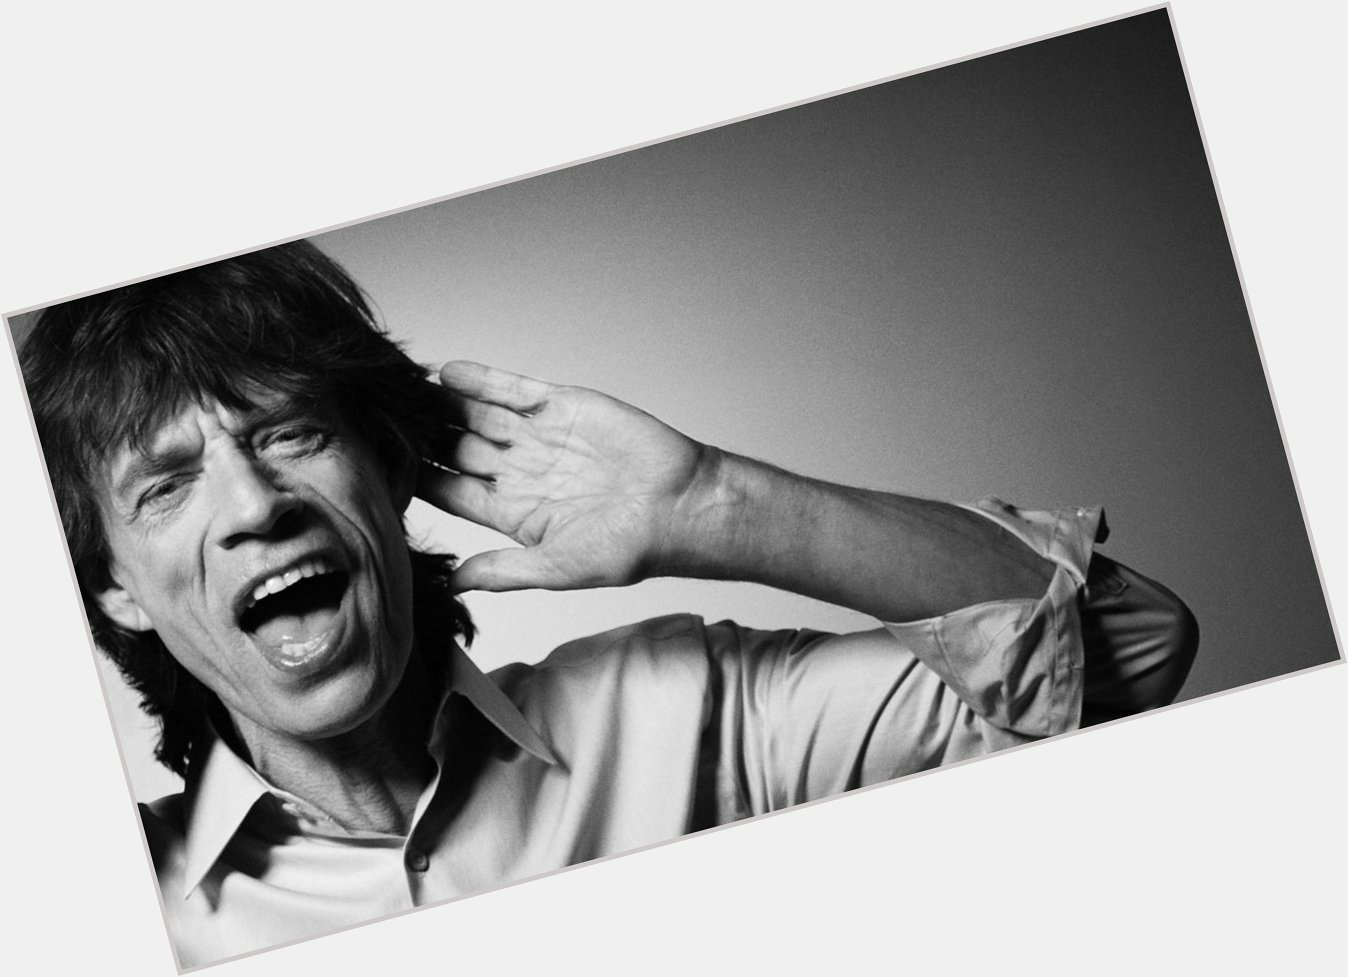 Happy 72nd birthday to Mick Jagger! 